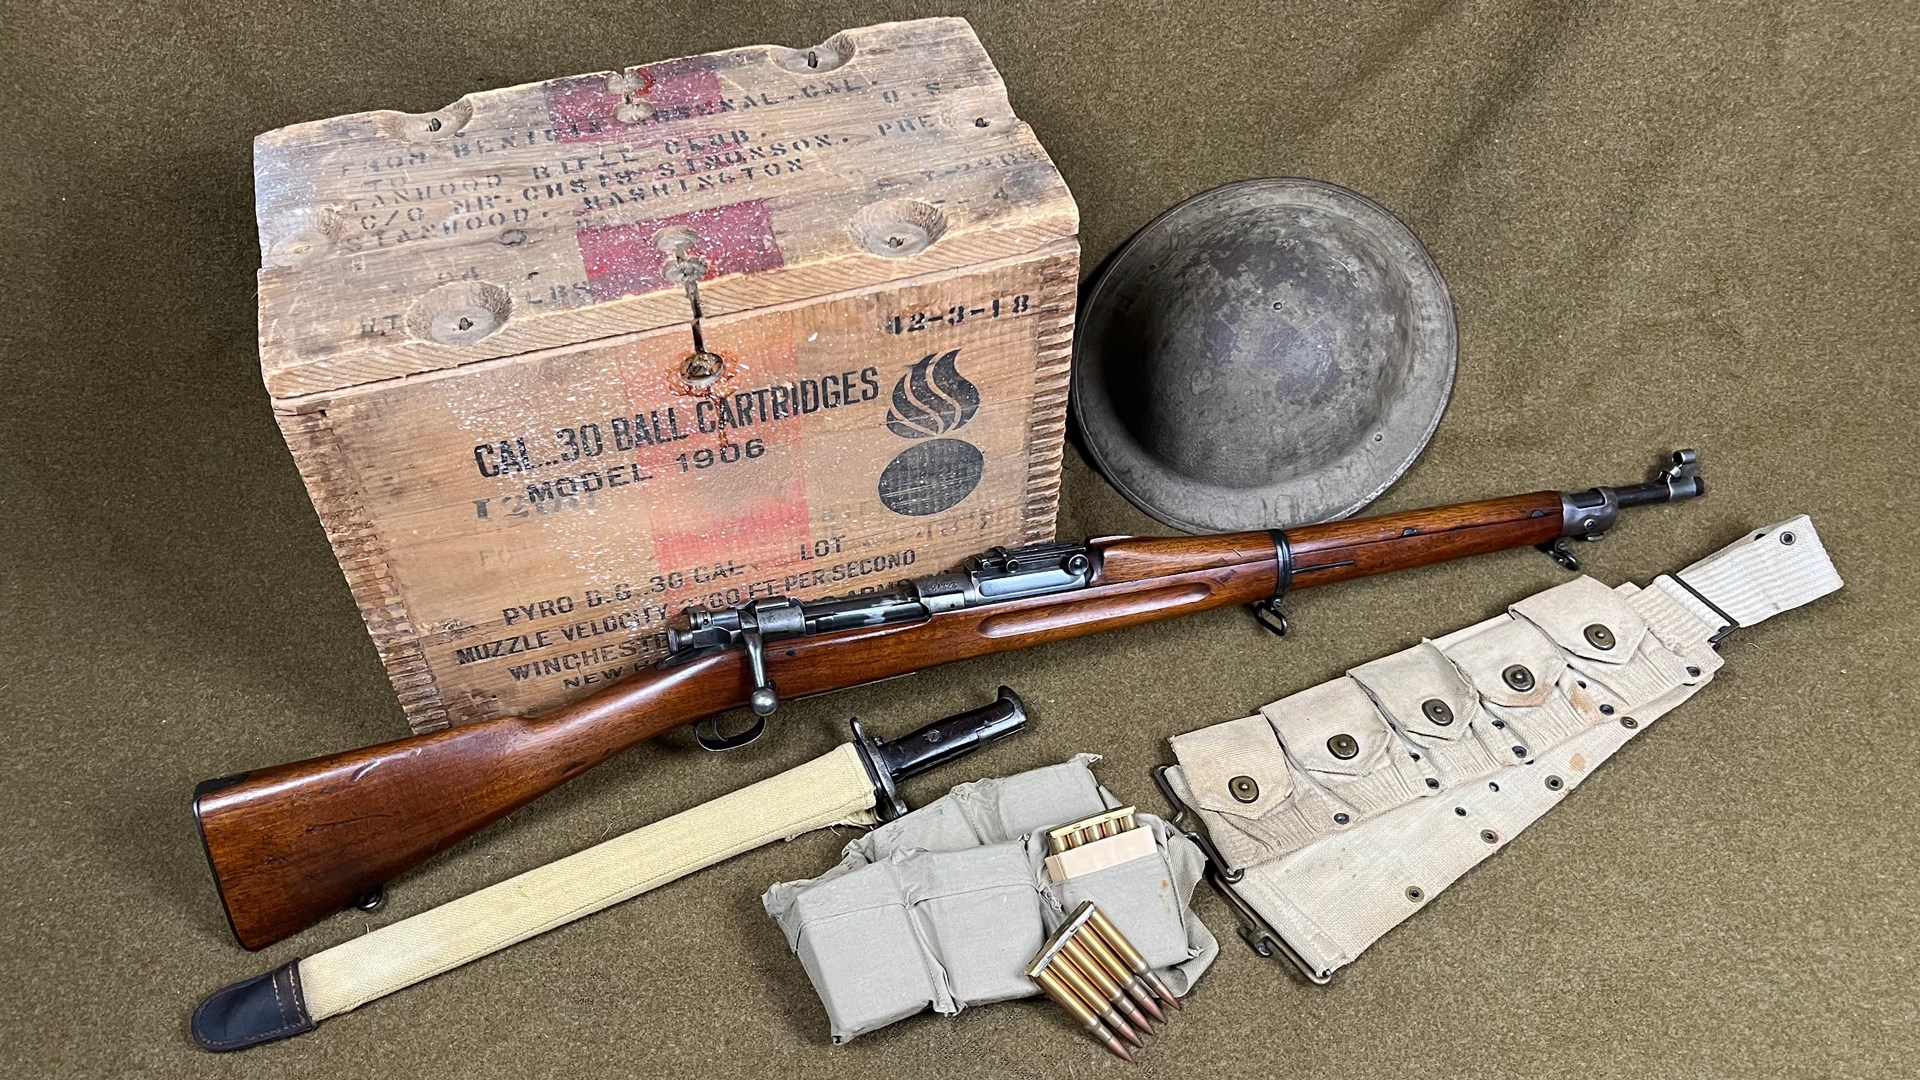 m1903 rifle and equipment